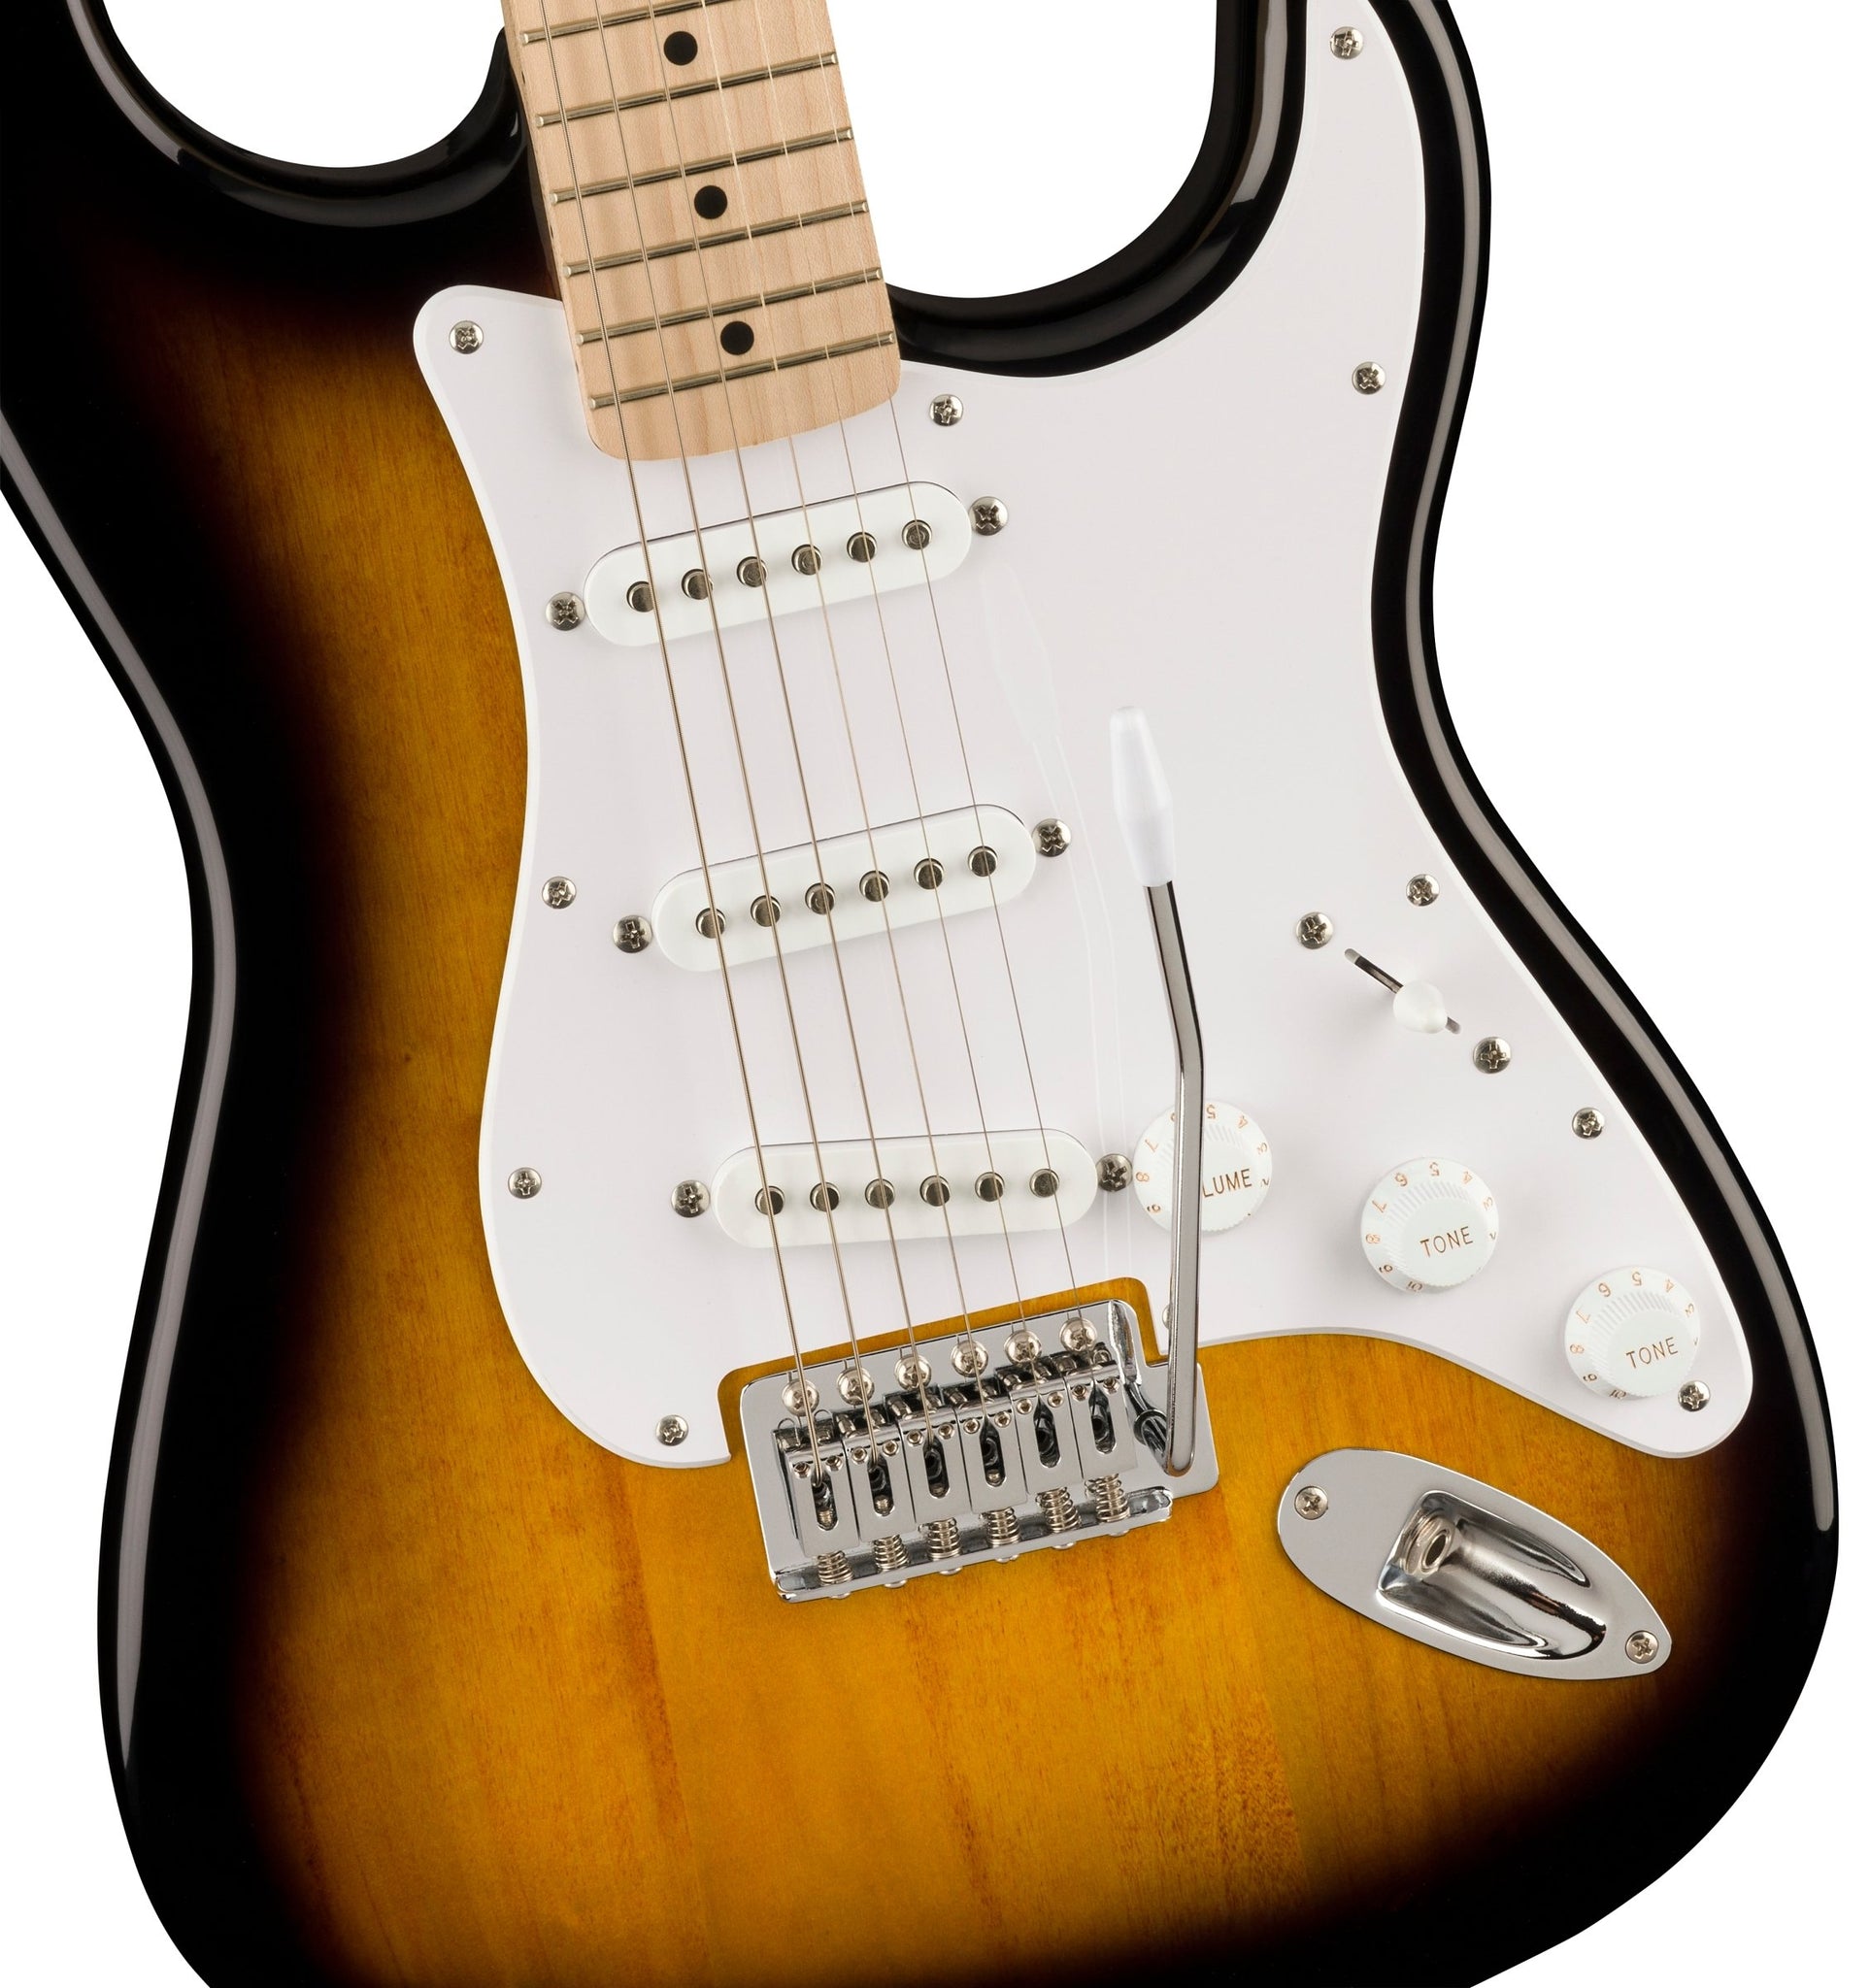 FENDER 0371720003 Squier Sonic Stratocaster Electric Guitar Pack (2-Tone Sunburst)